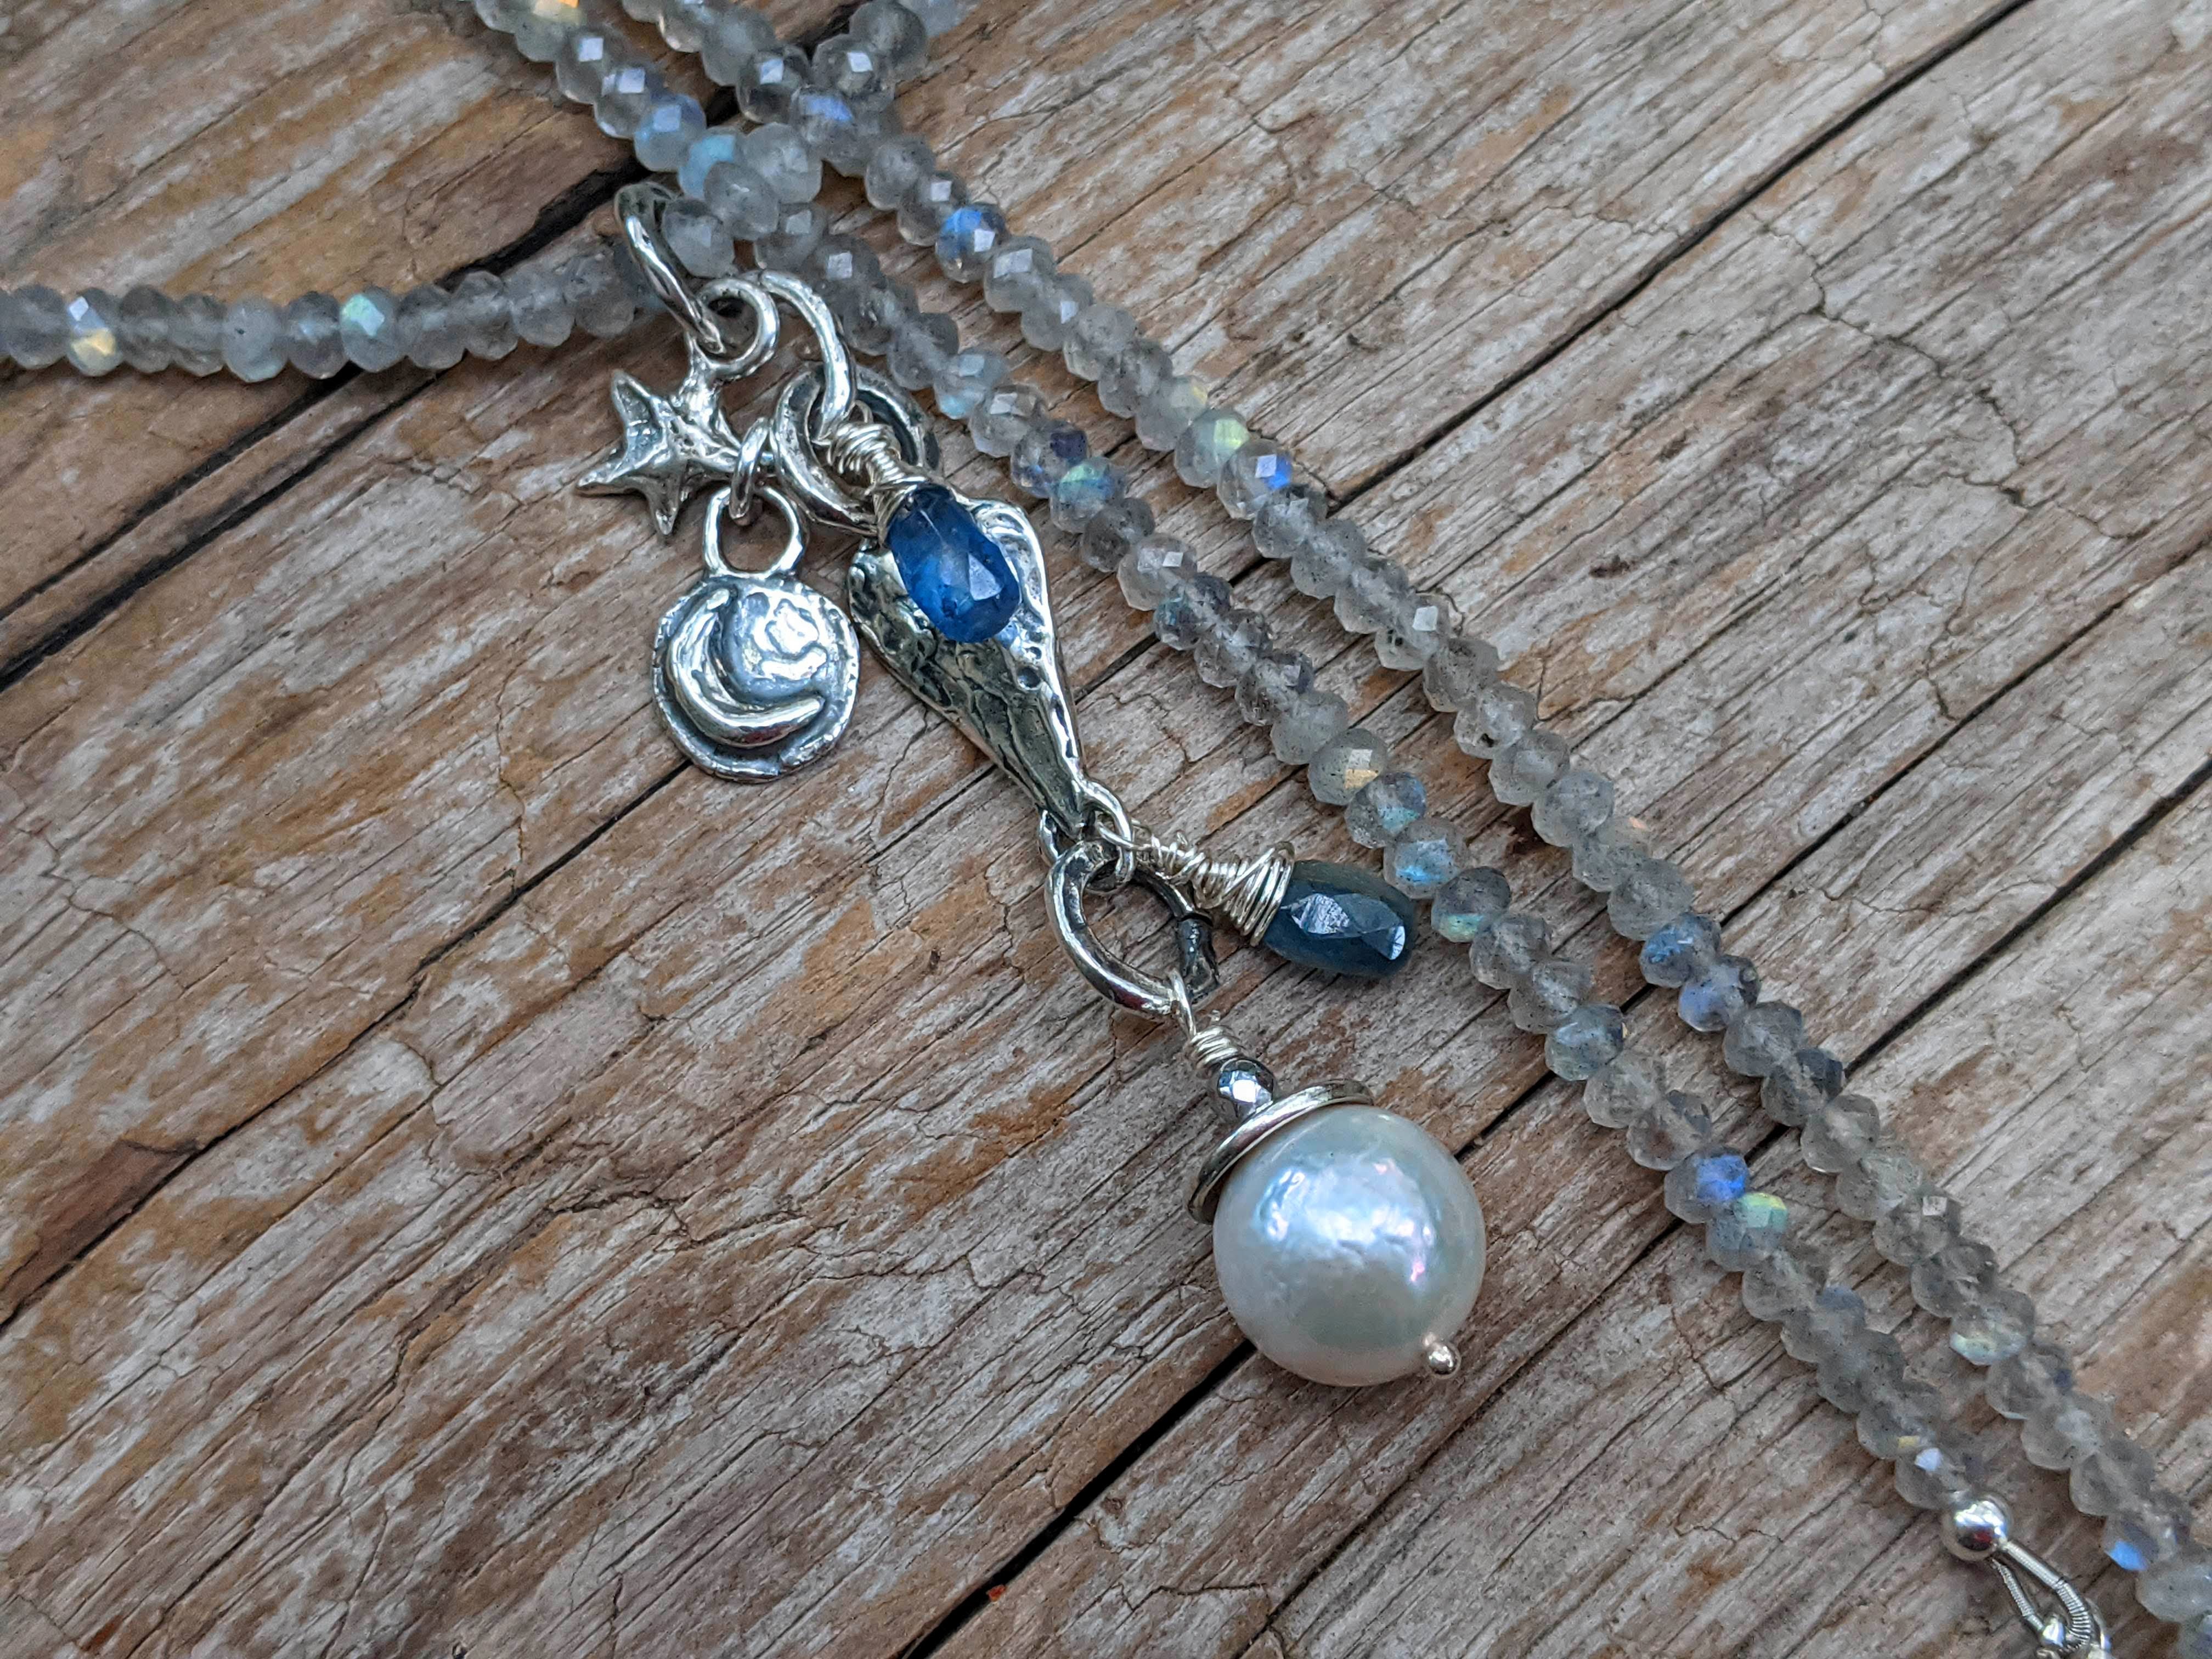 Silver Labradorite Necklace with White Edison Pearl, Crescent Moon & Star Pendant